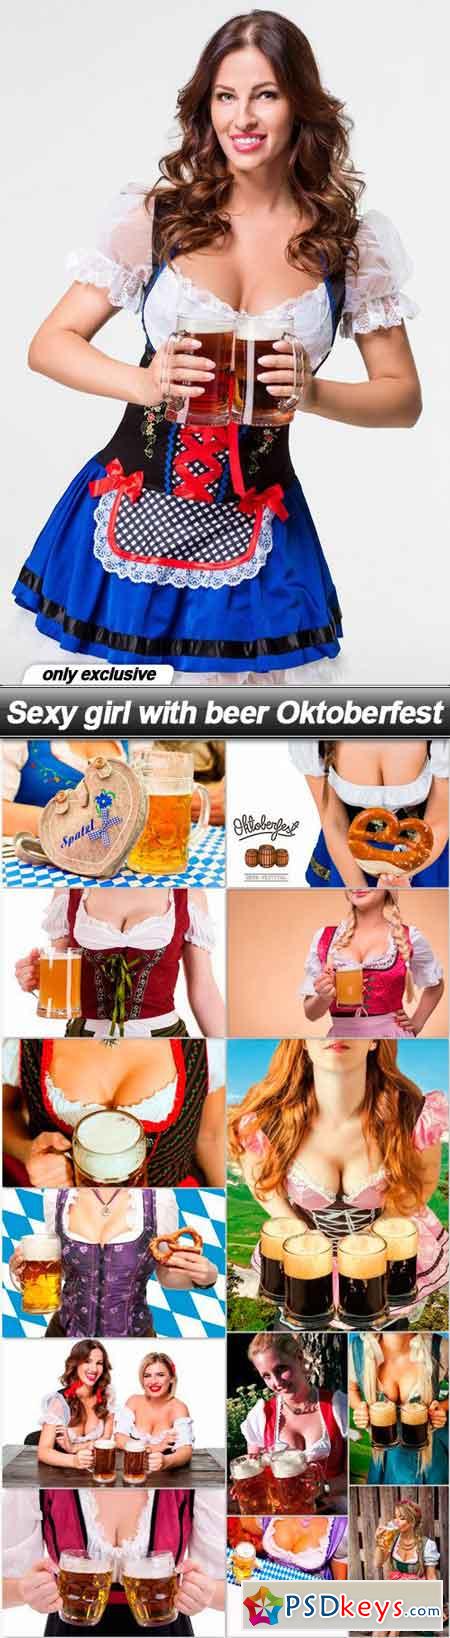 Sexy girl with beer Oktoberfest - 14 UHQ JPEG